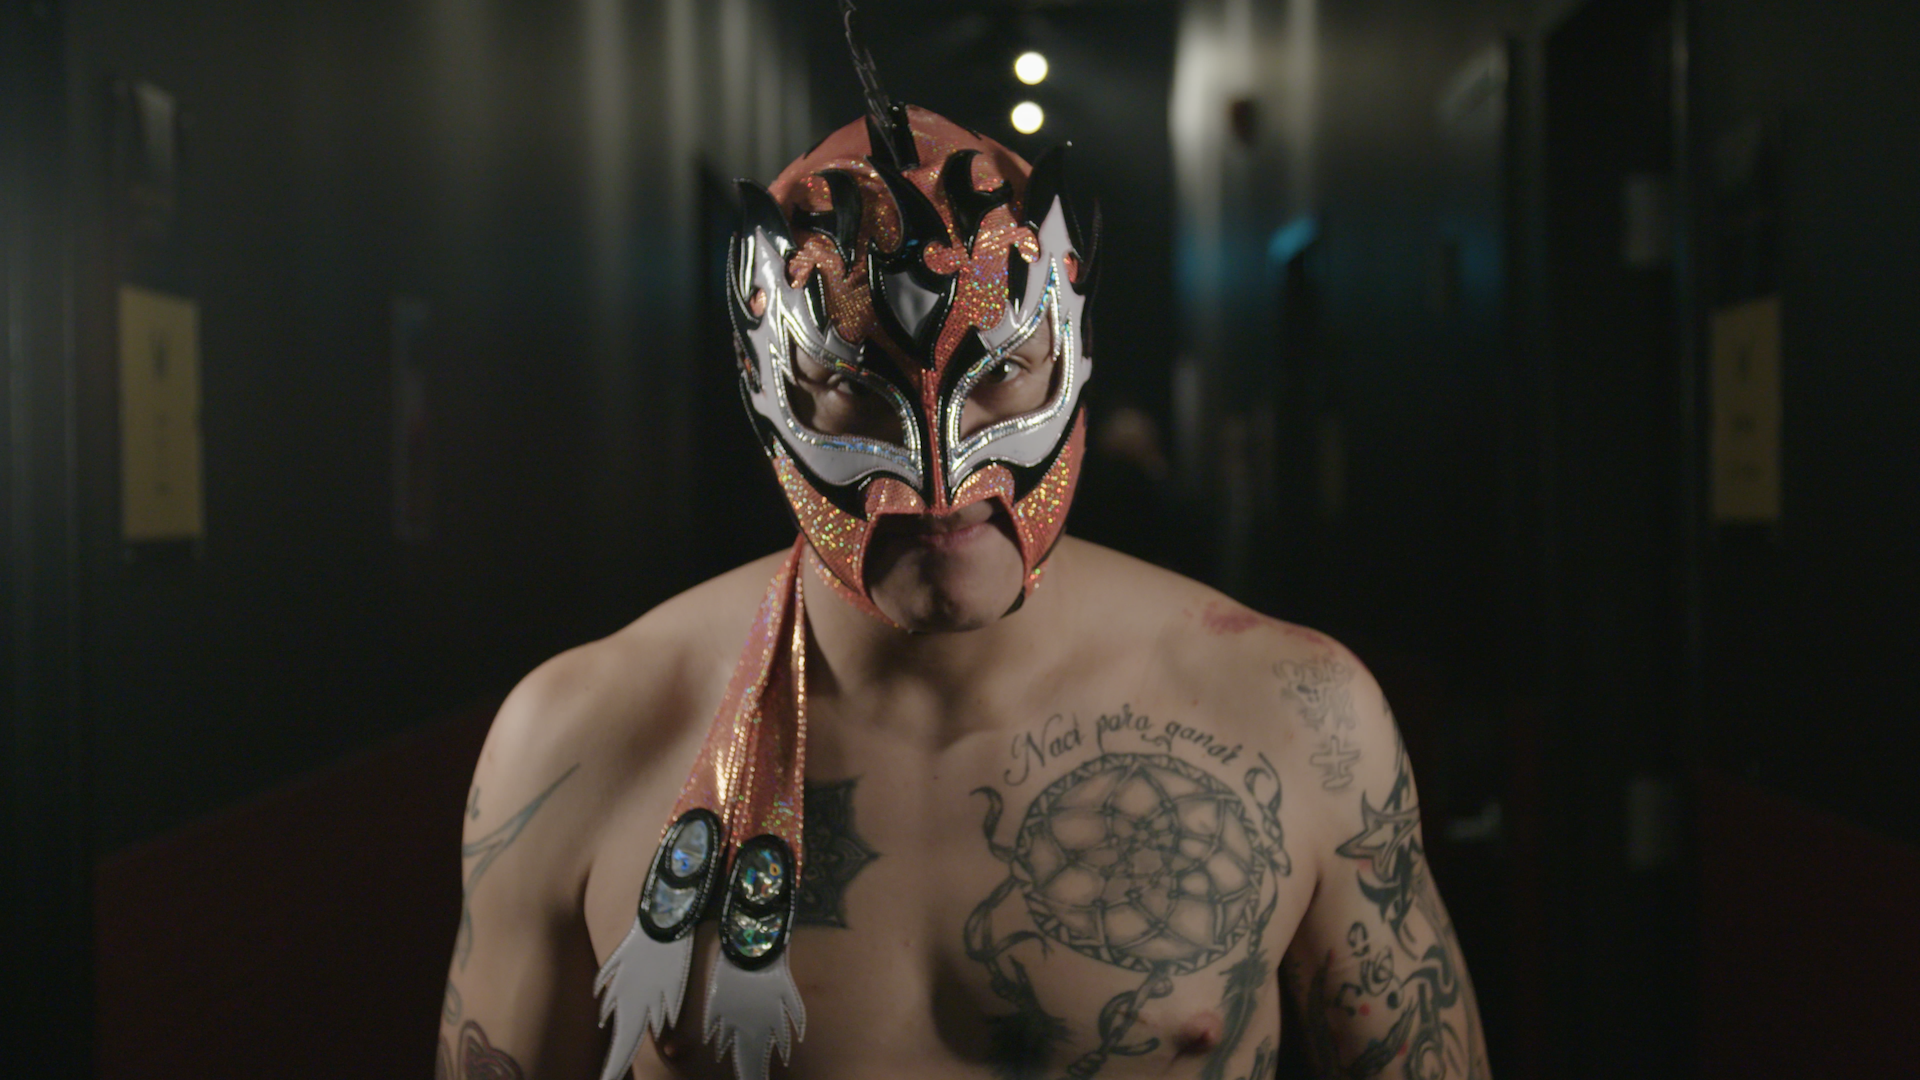 Why Luchador Rey Fenix Wears a Mask - VICE Video: Documentaries, Films, News Videos